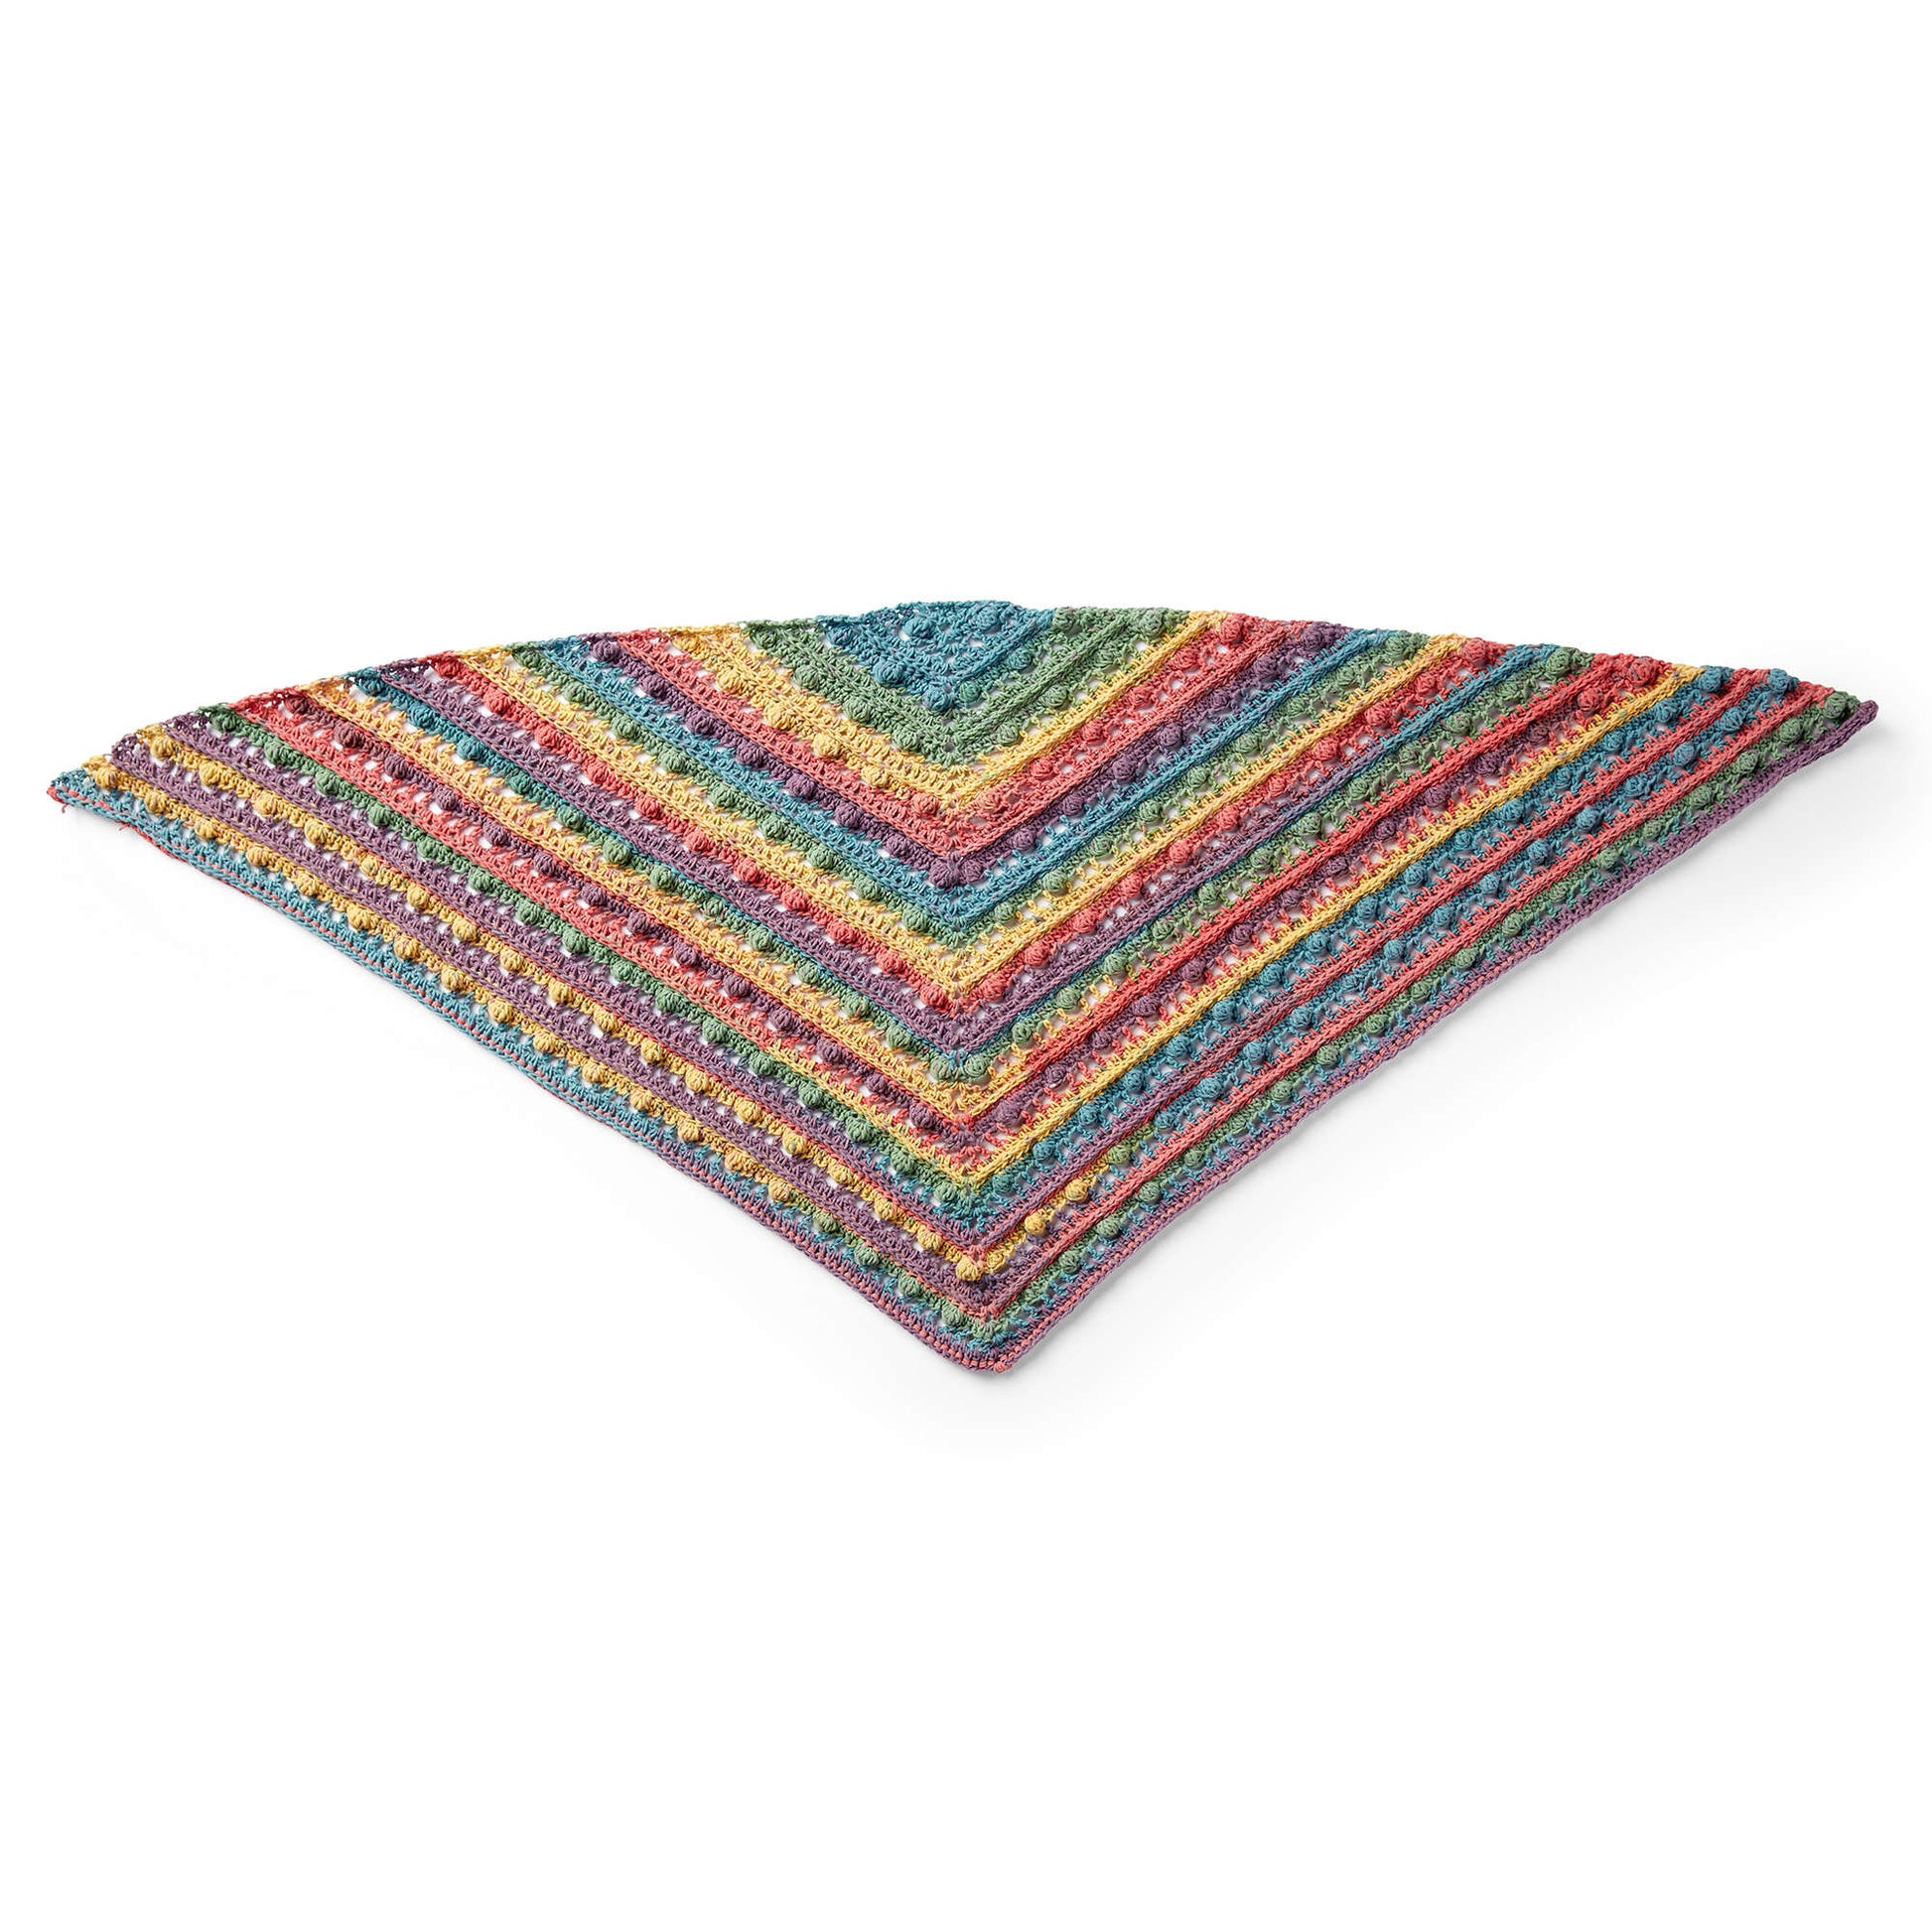 Free Caron Triangular Crochet Shawl Pattern